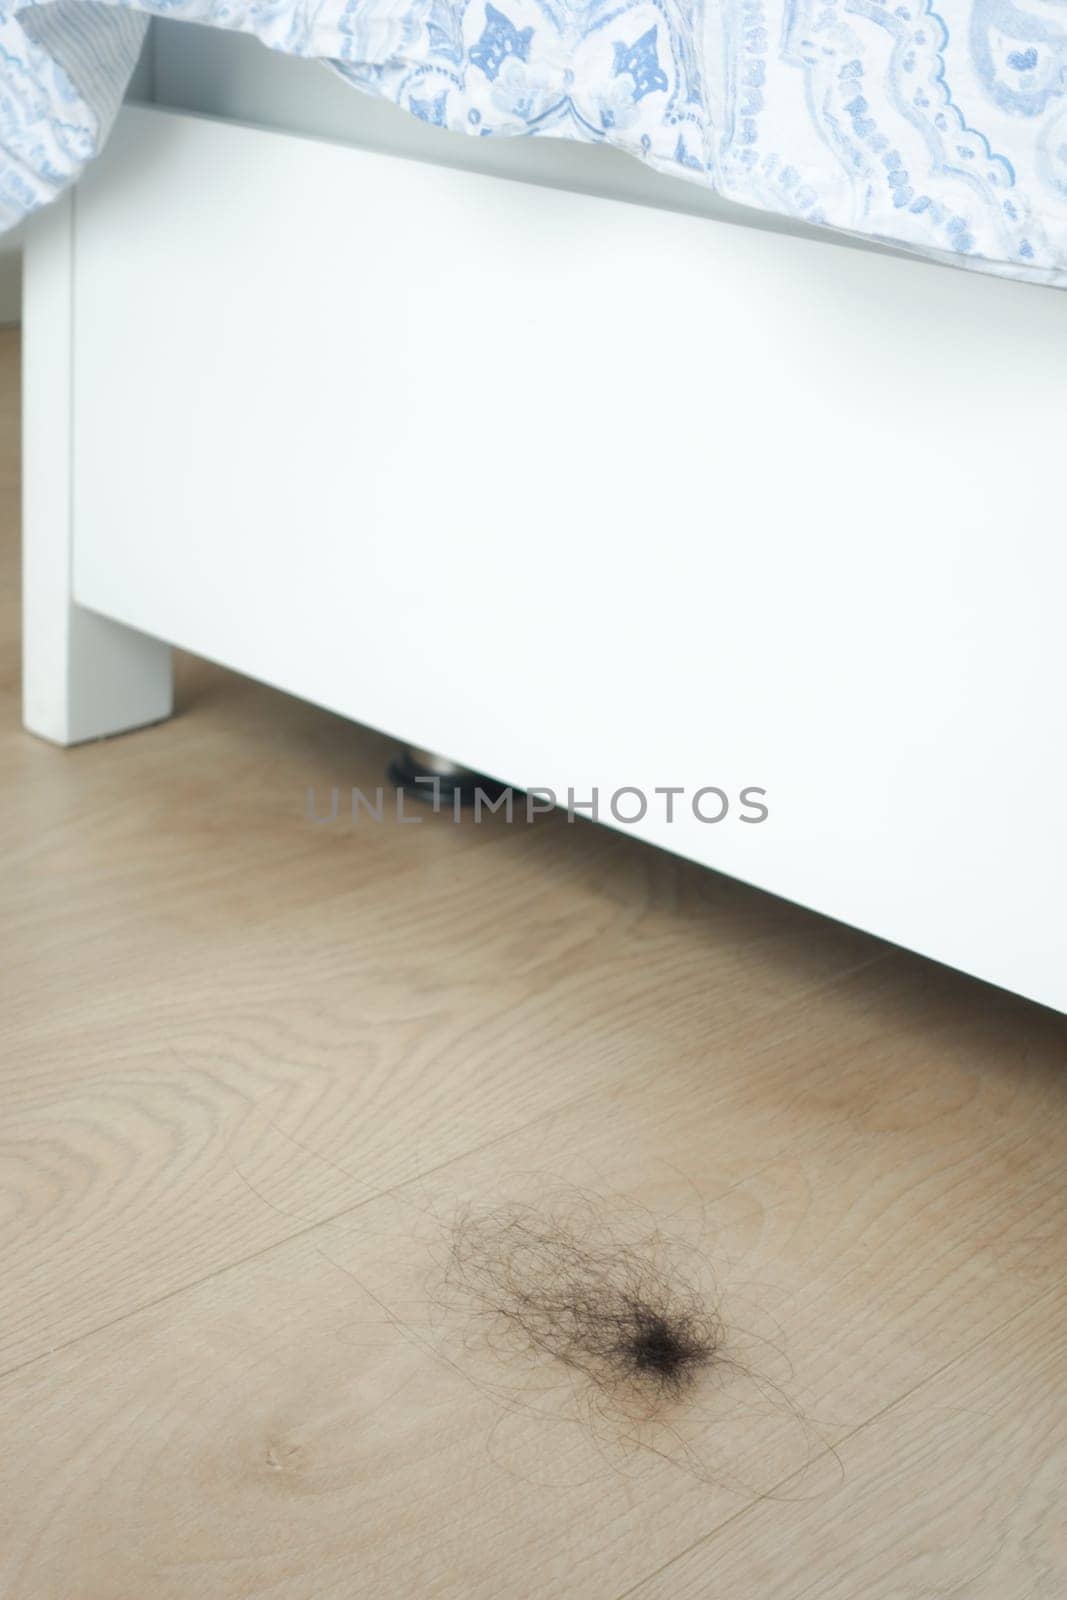 women lost hair drops on floor by towfiq007